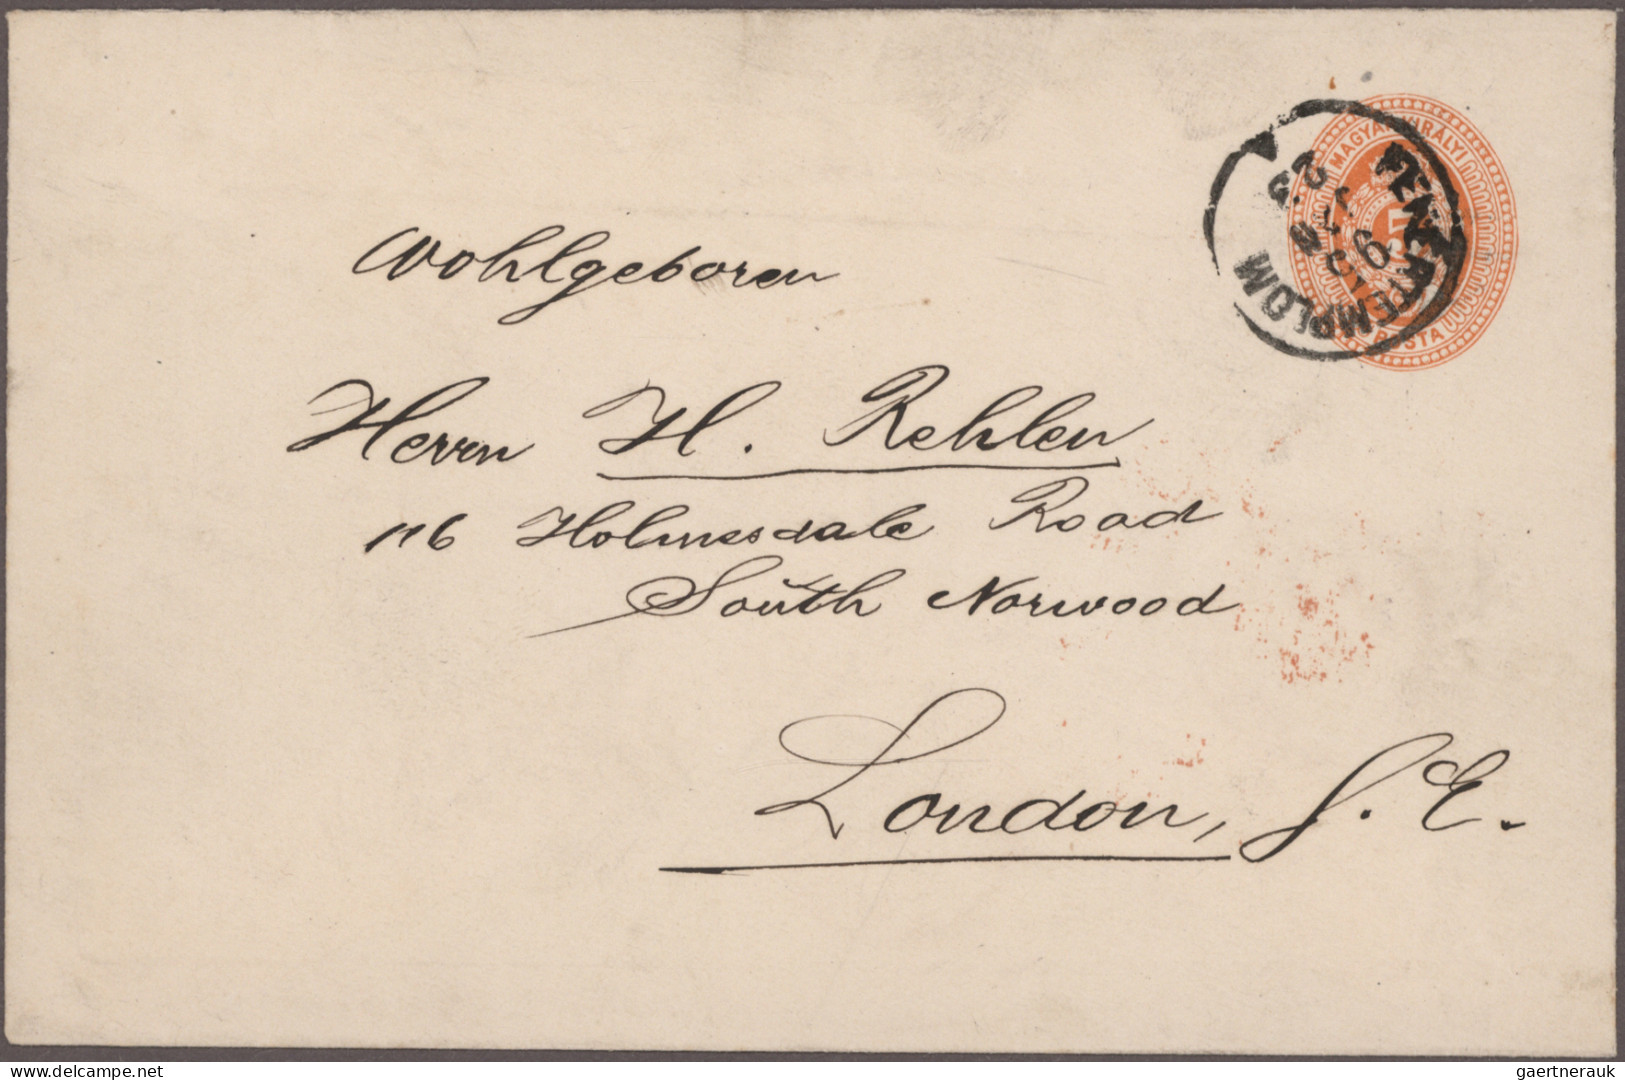 Hungary - Postal Stationary: 1895/1898, stationery envelope 5kr. orange, group o